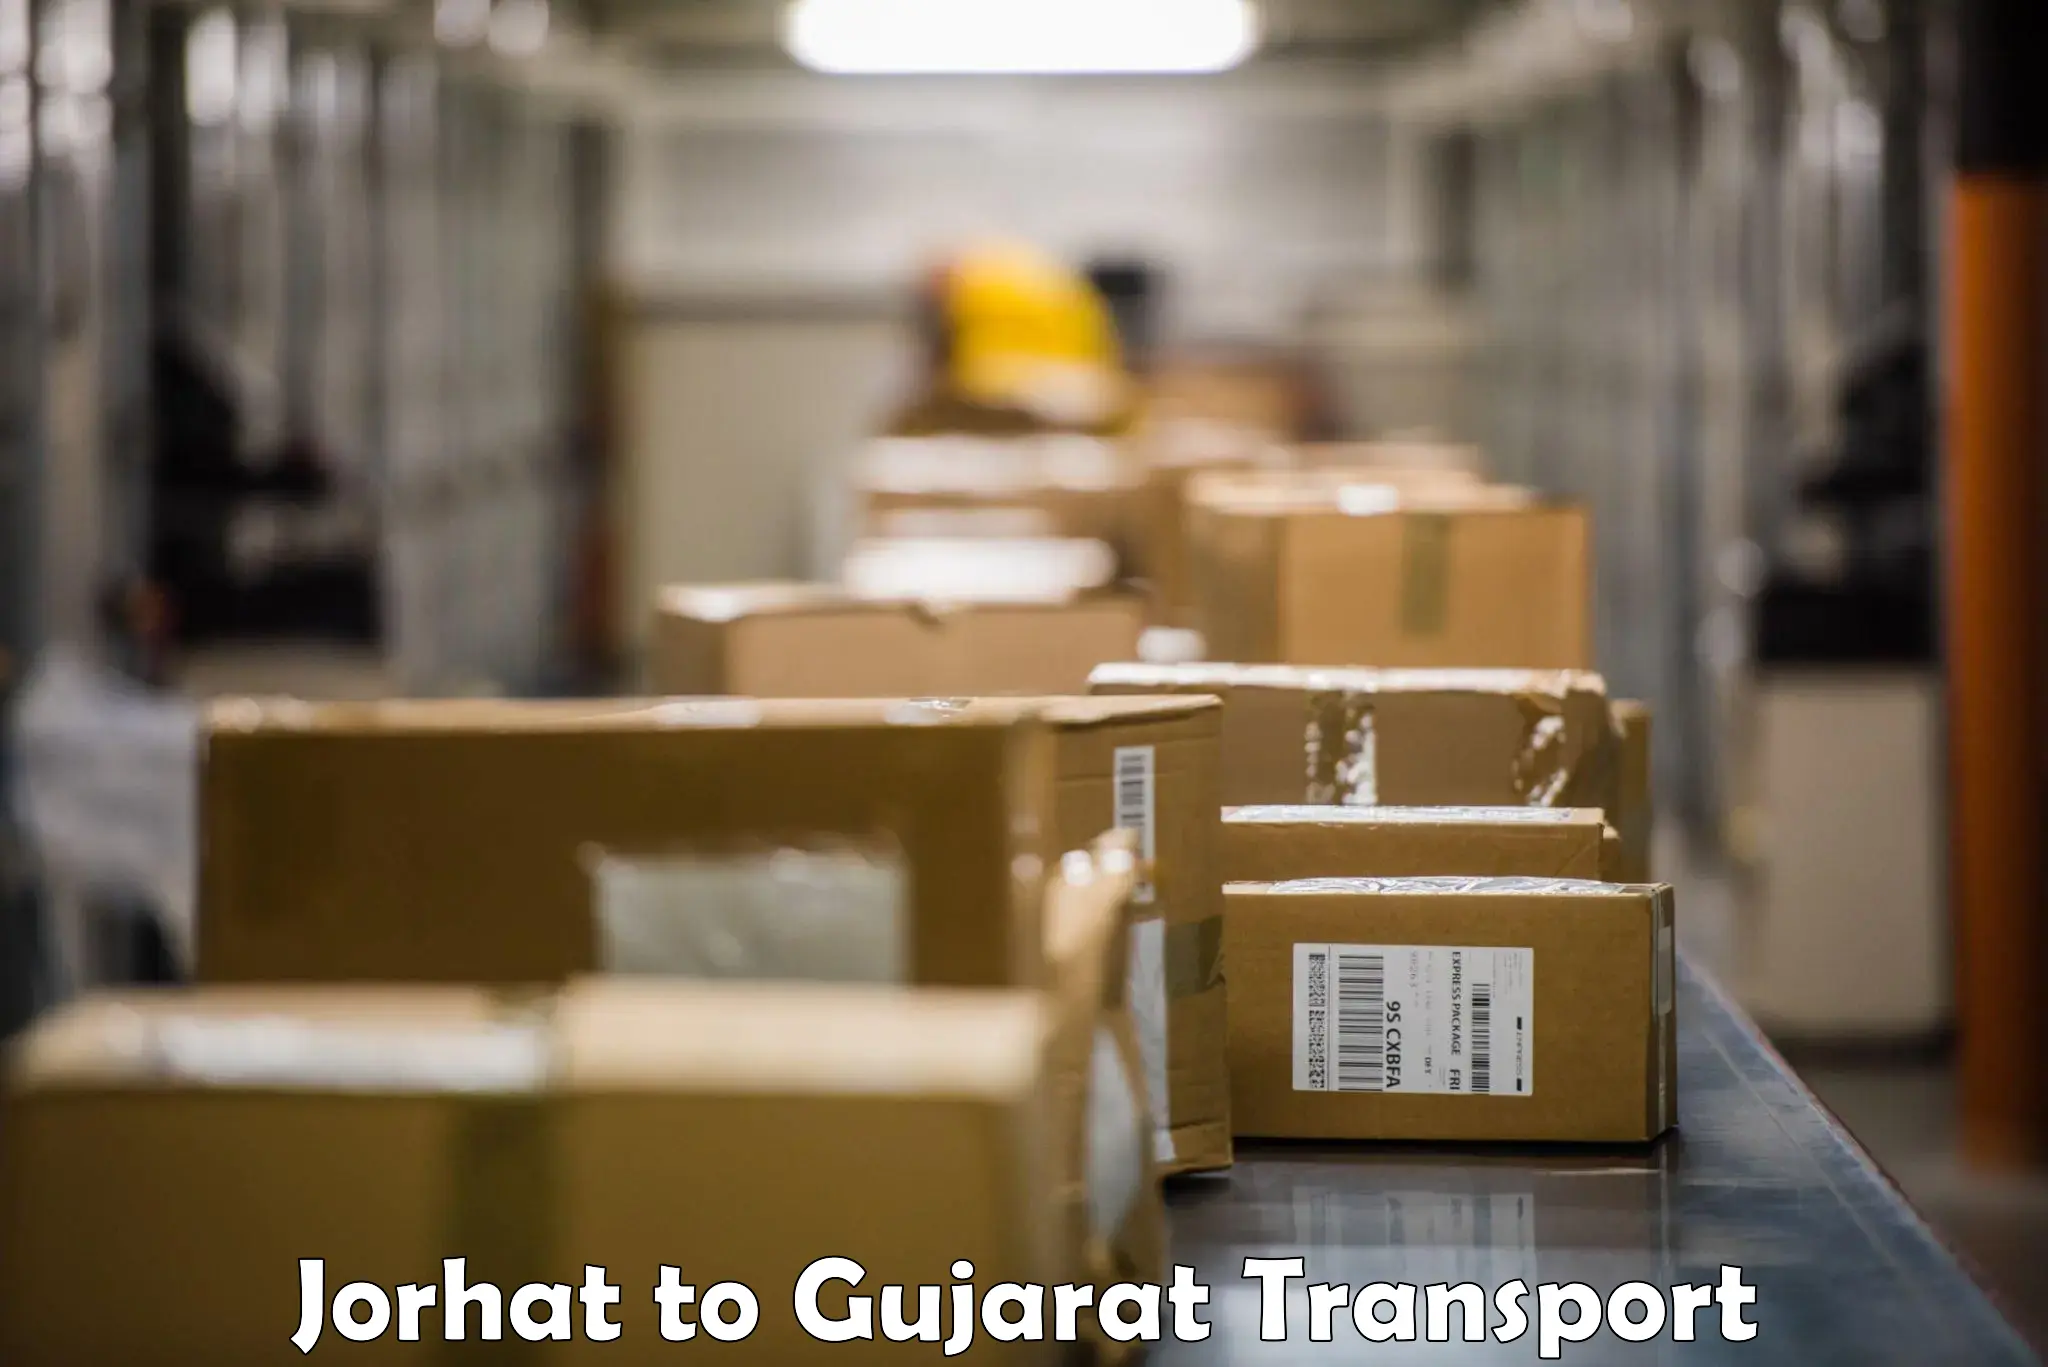 International cargo transportation services Jorhat to GIDC